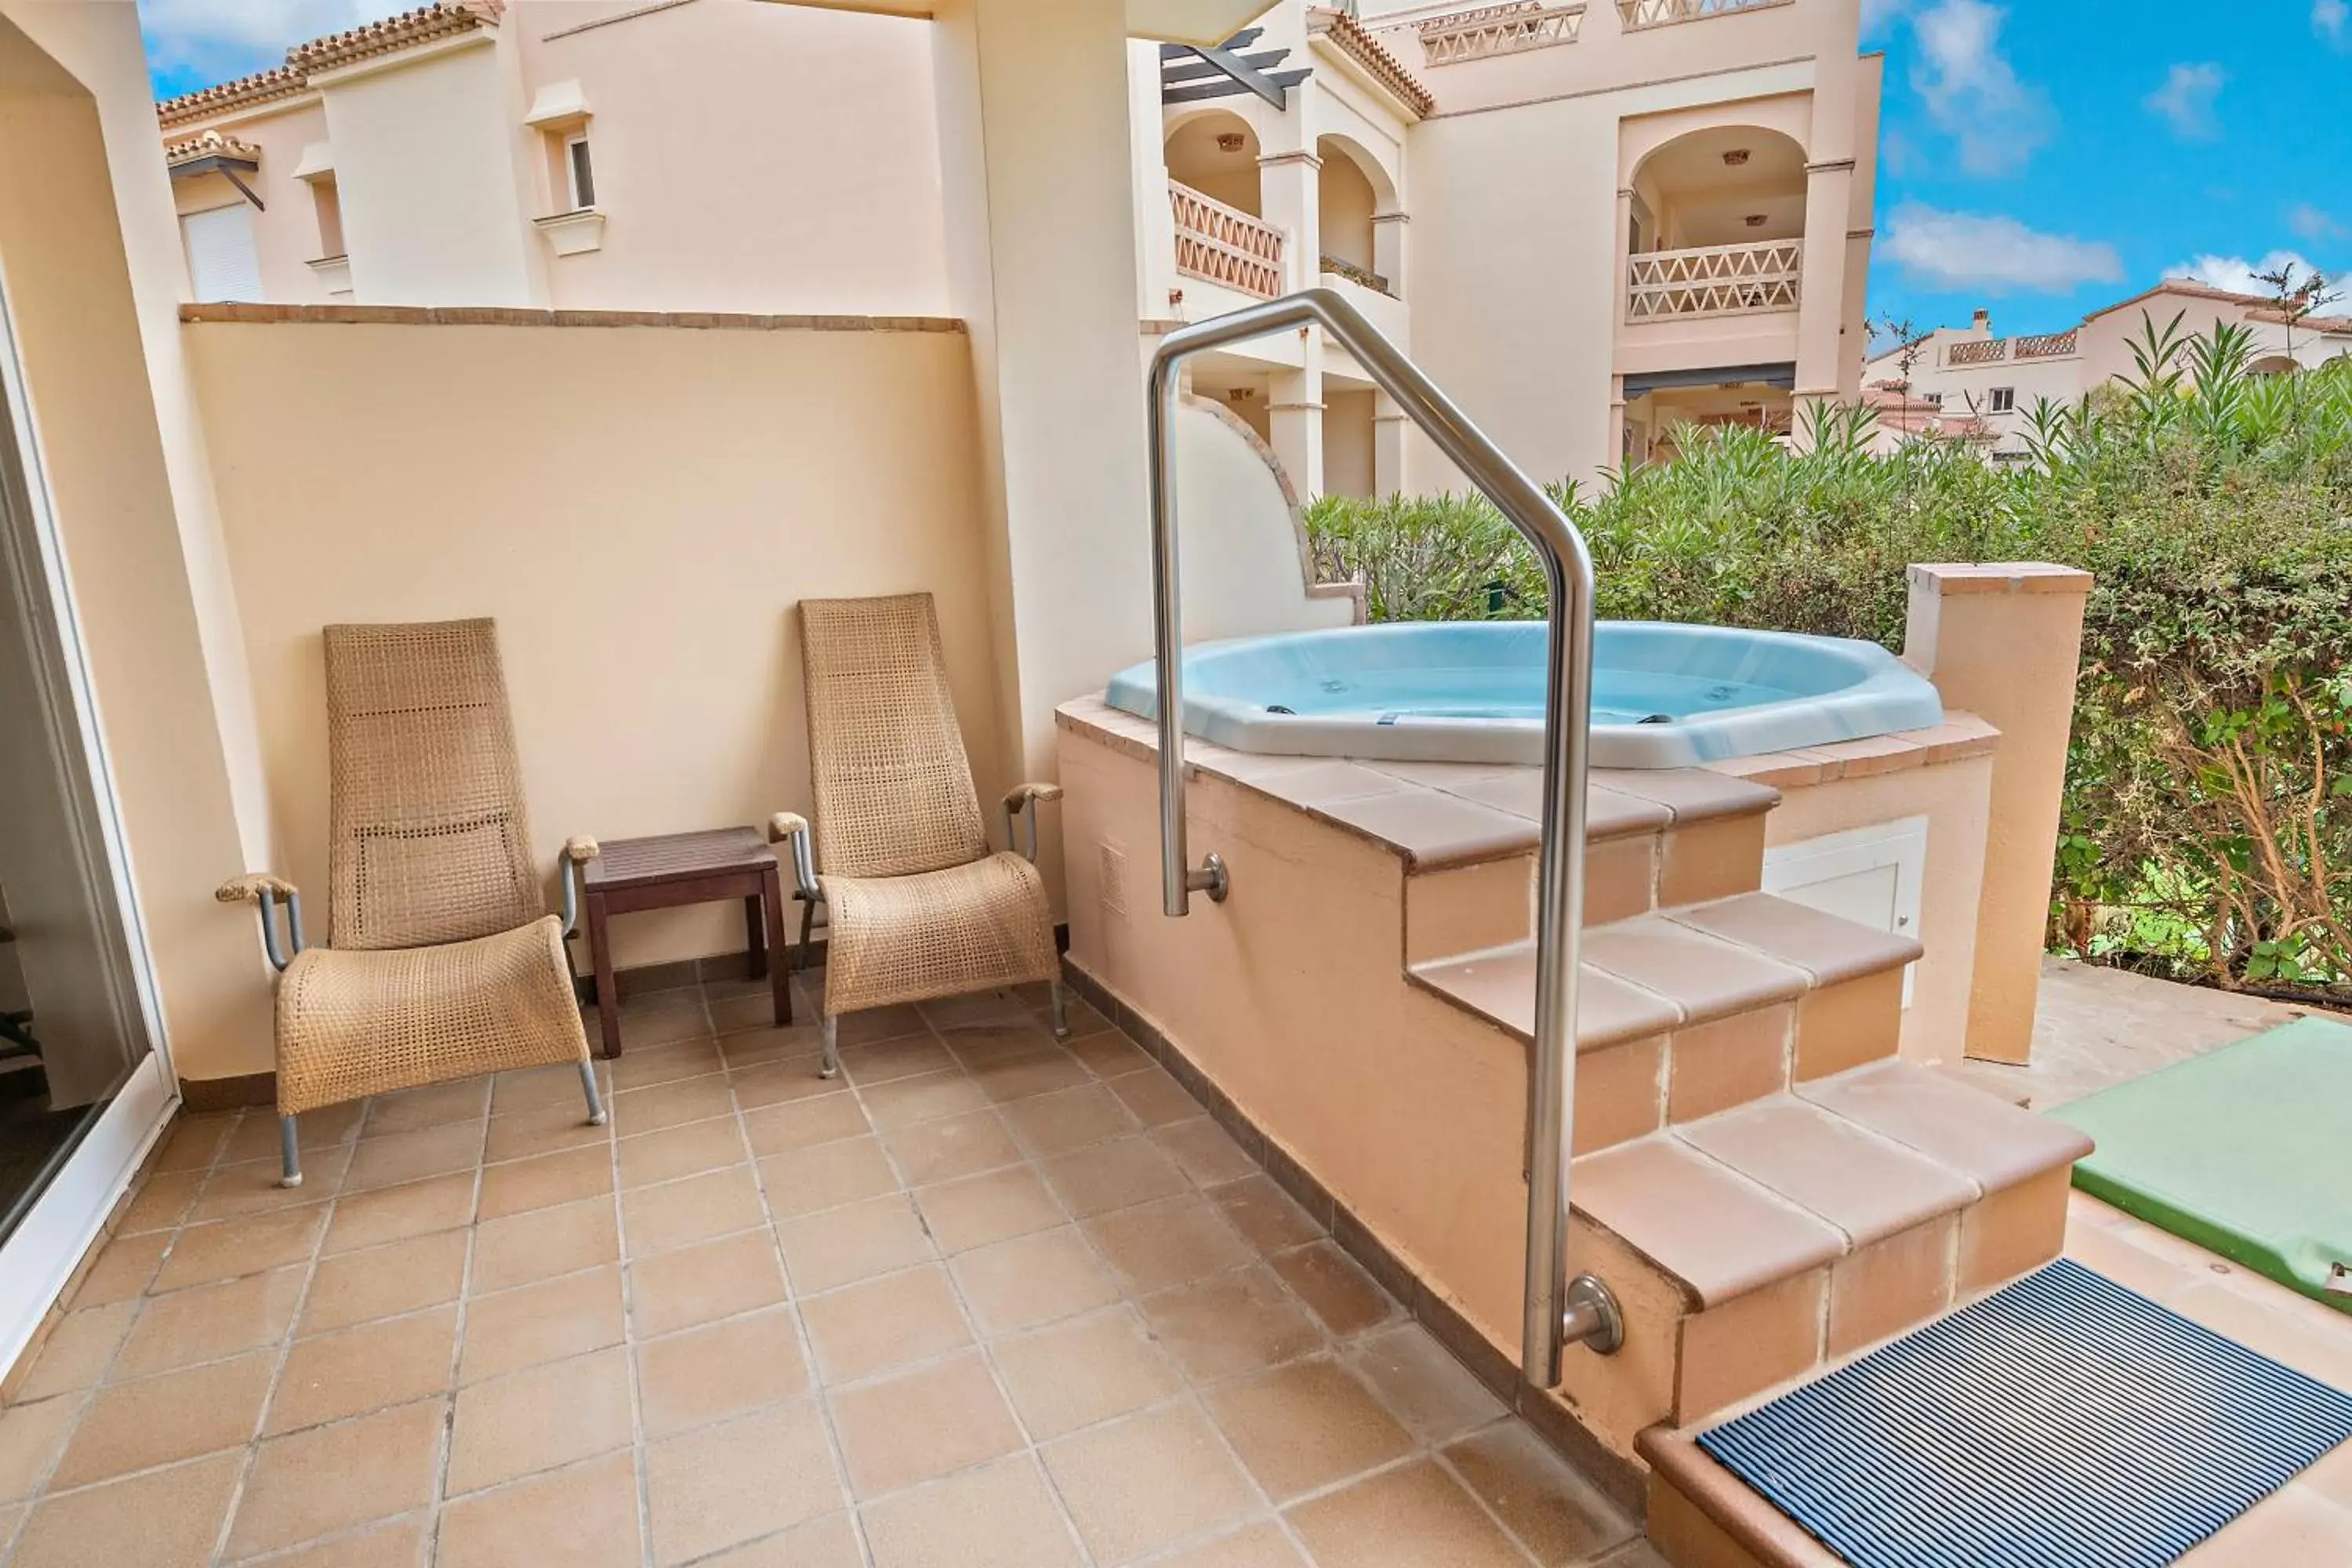 Hot Tub, Swimming Pool in Wyndham Grand Residences Costa del Sol